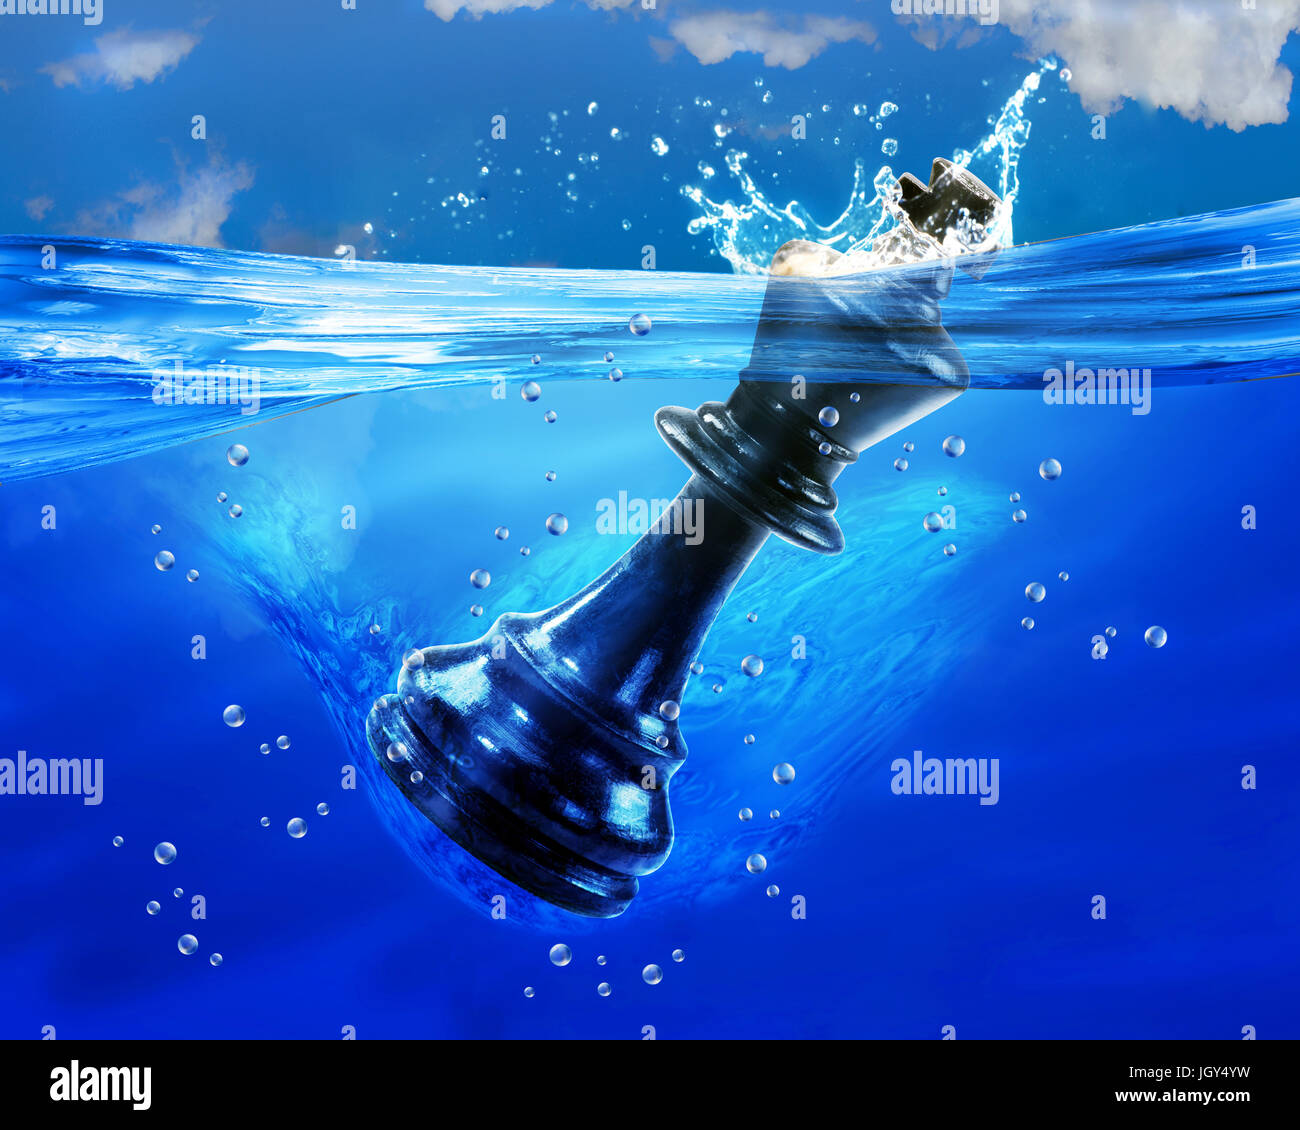 Kink Chessman in deep blue water. Stock Photo